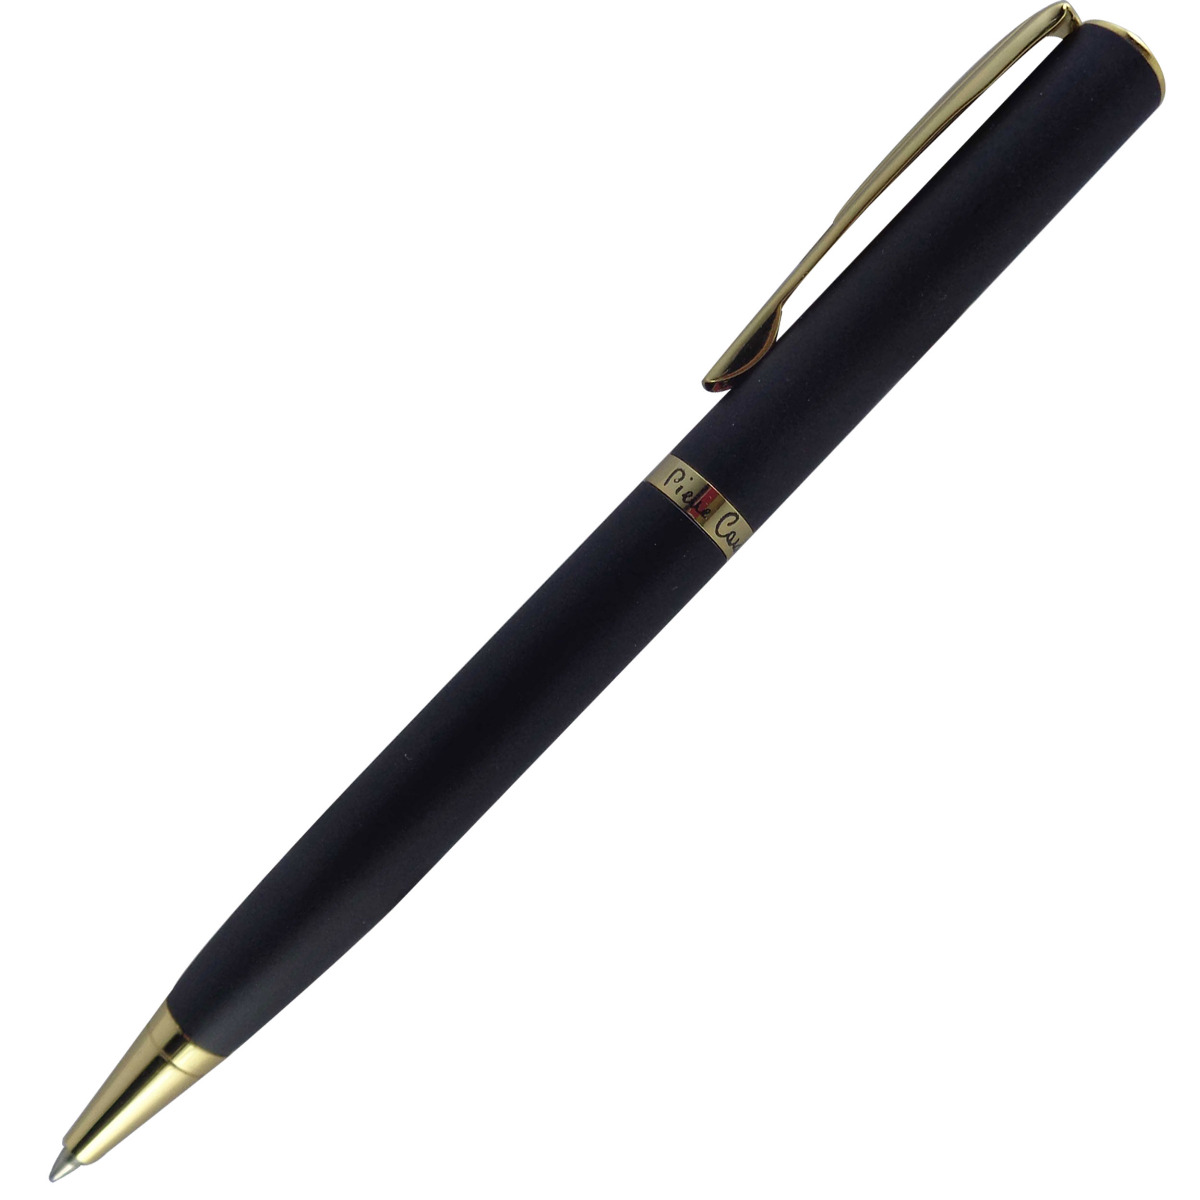 Pierre cardin golden eye Model:13599 Black color body mat finish with golden clip fine Tip Twist type ball pen